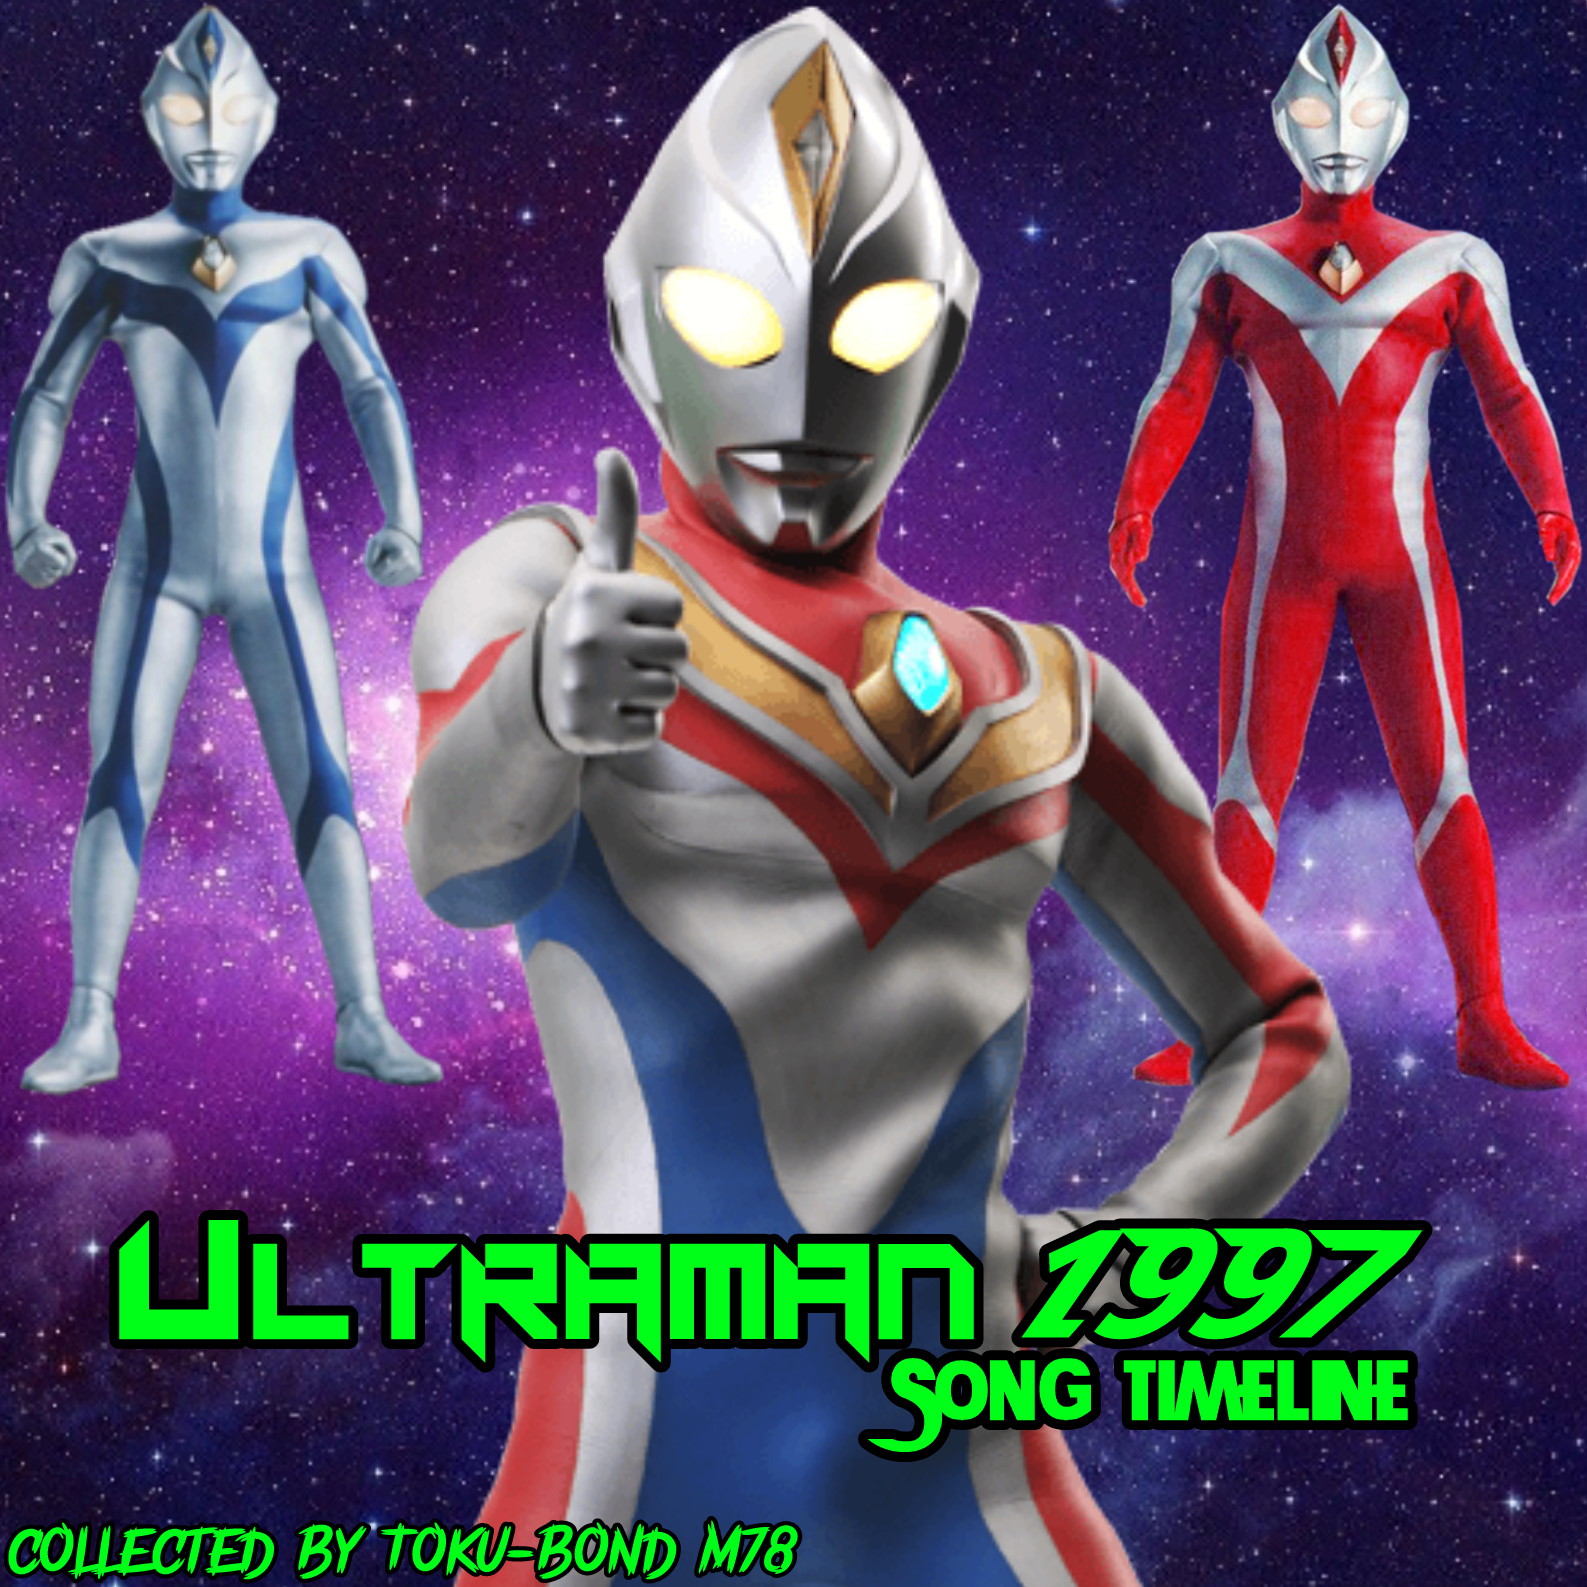 Ultraman Song Music Complete Gudangnya Semua Lagu Ultraman Terlengkap Mp3 320kbps Toku Bond M78